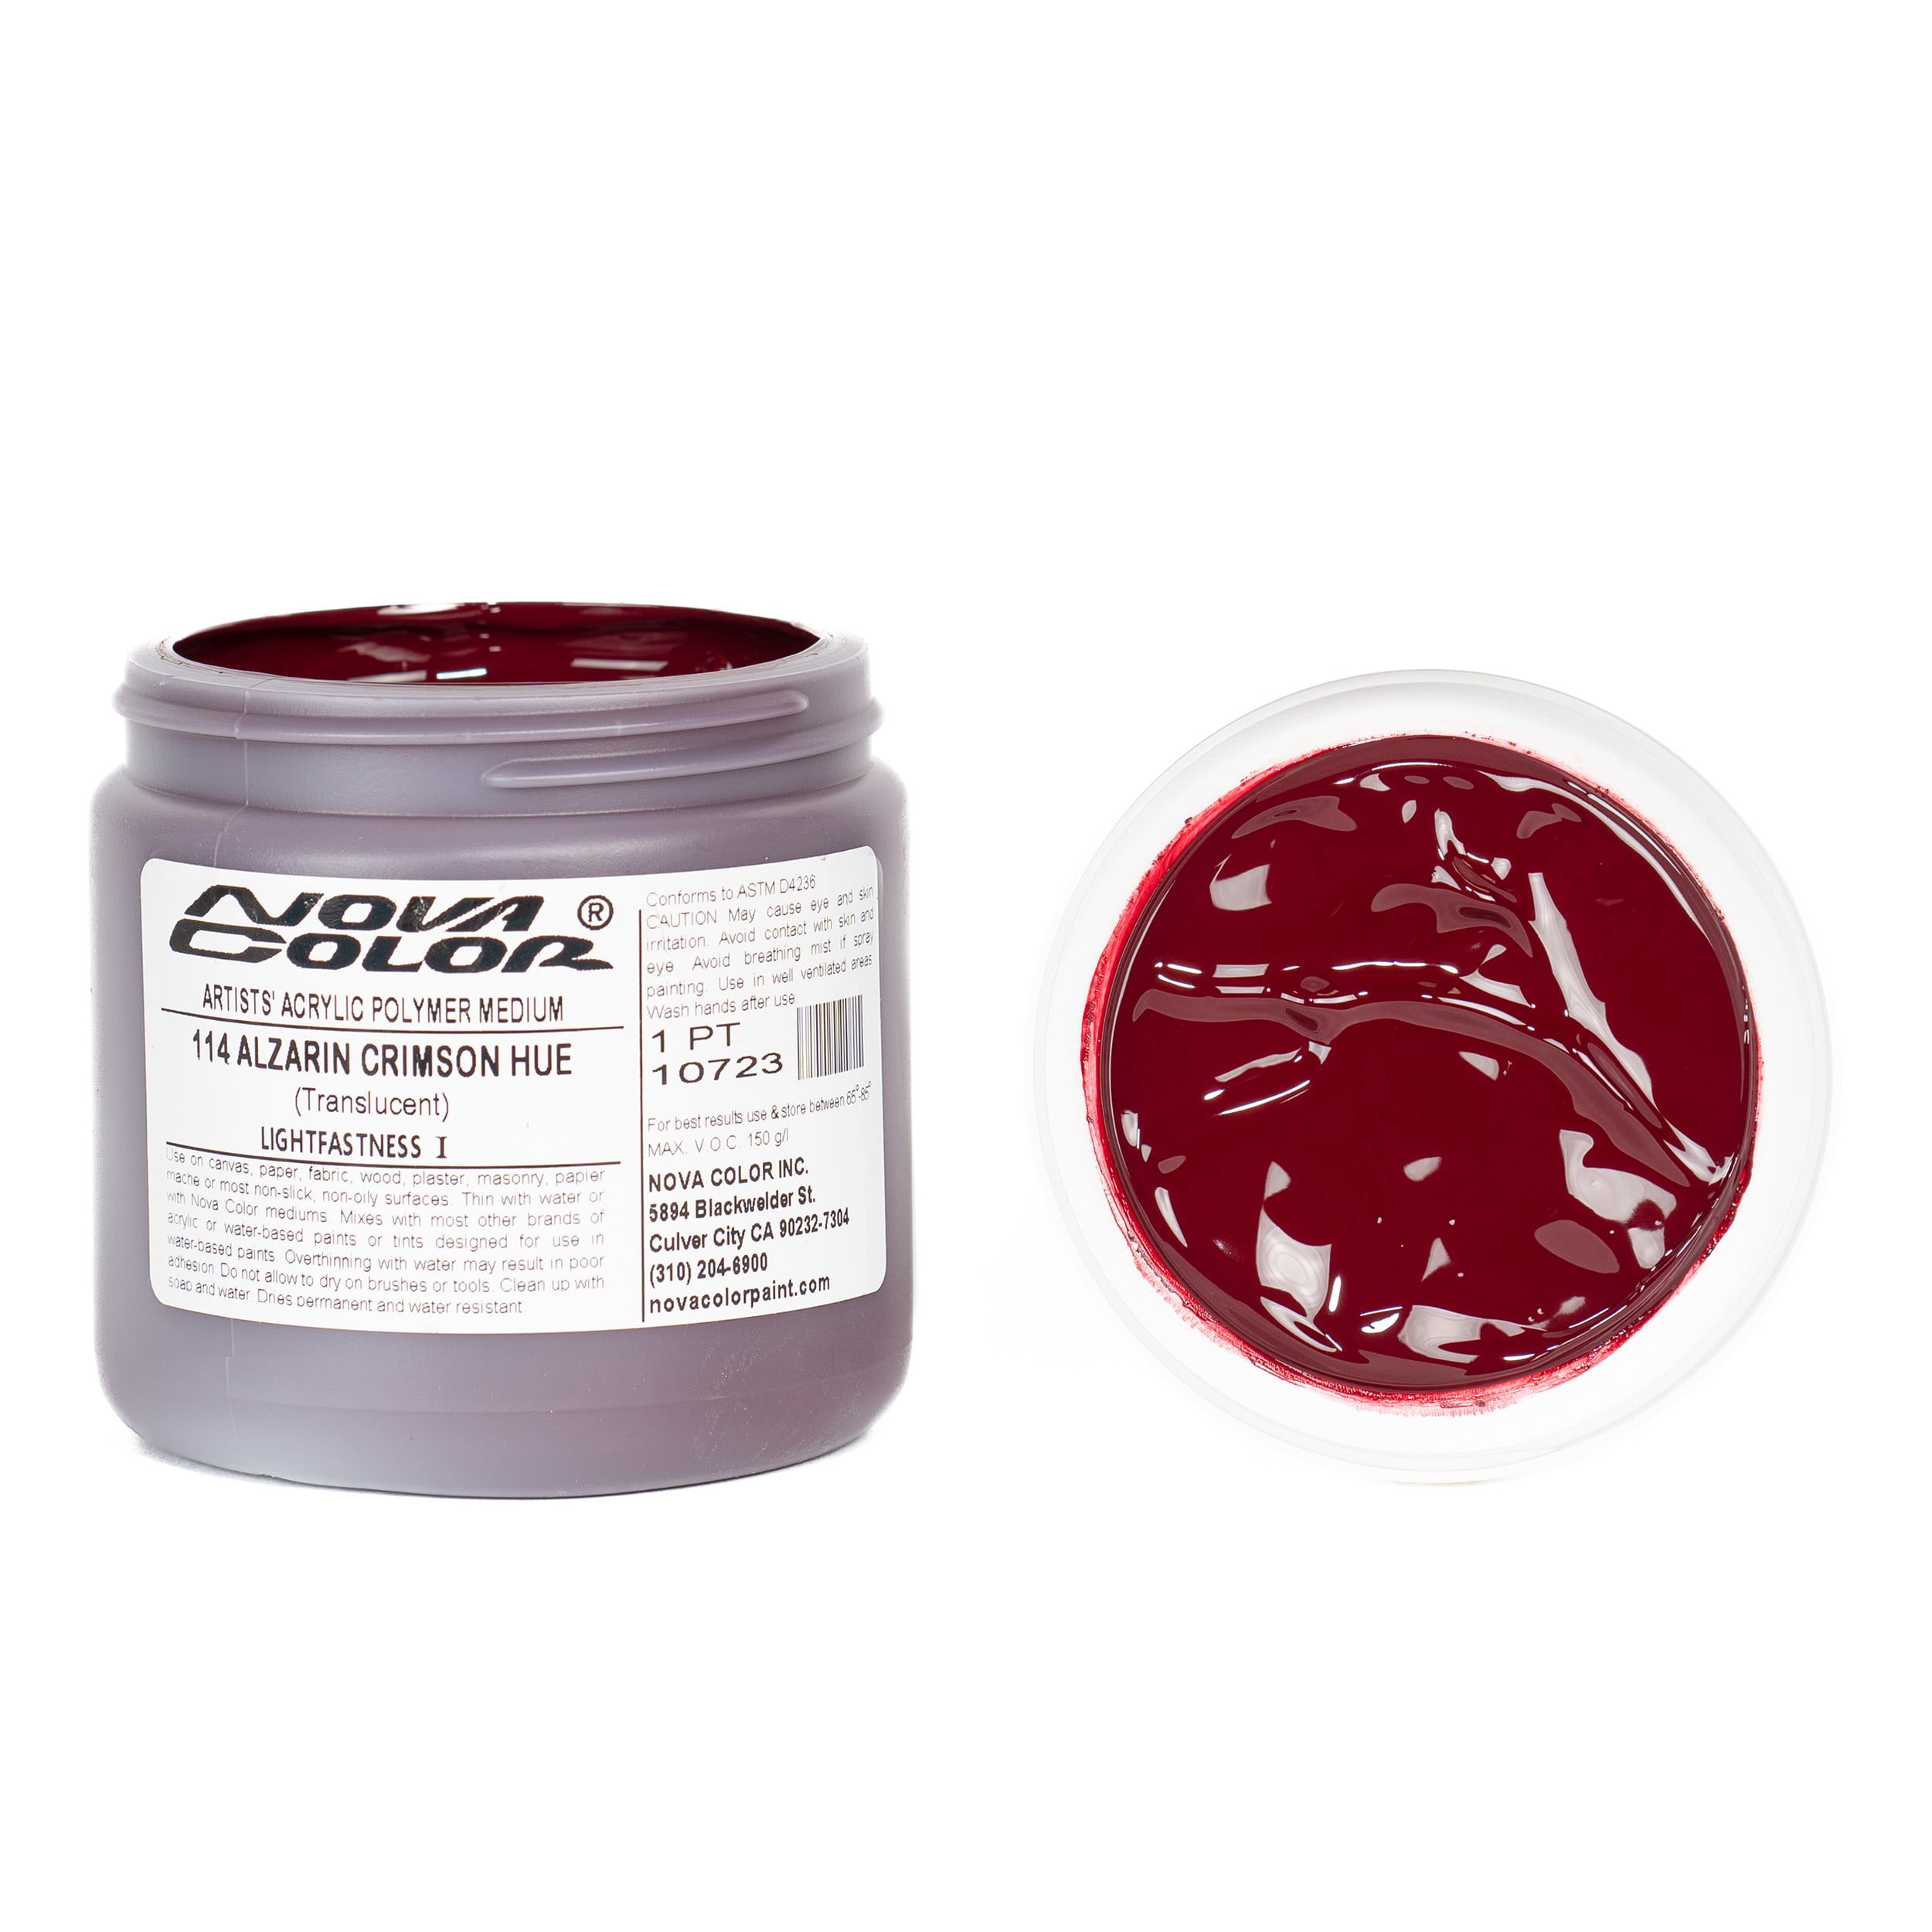 Buy #114 Alizarin Crimson Hue - Lightfastness:, - Transparent Online